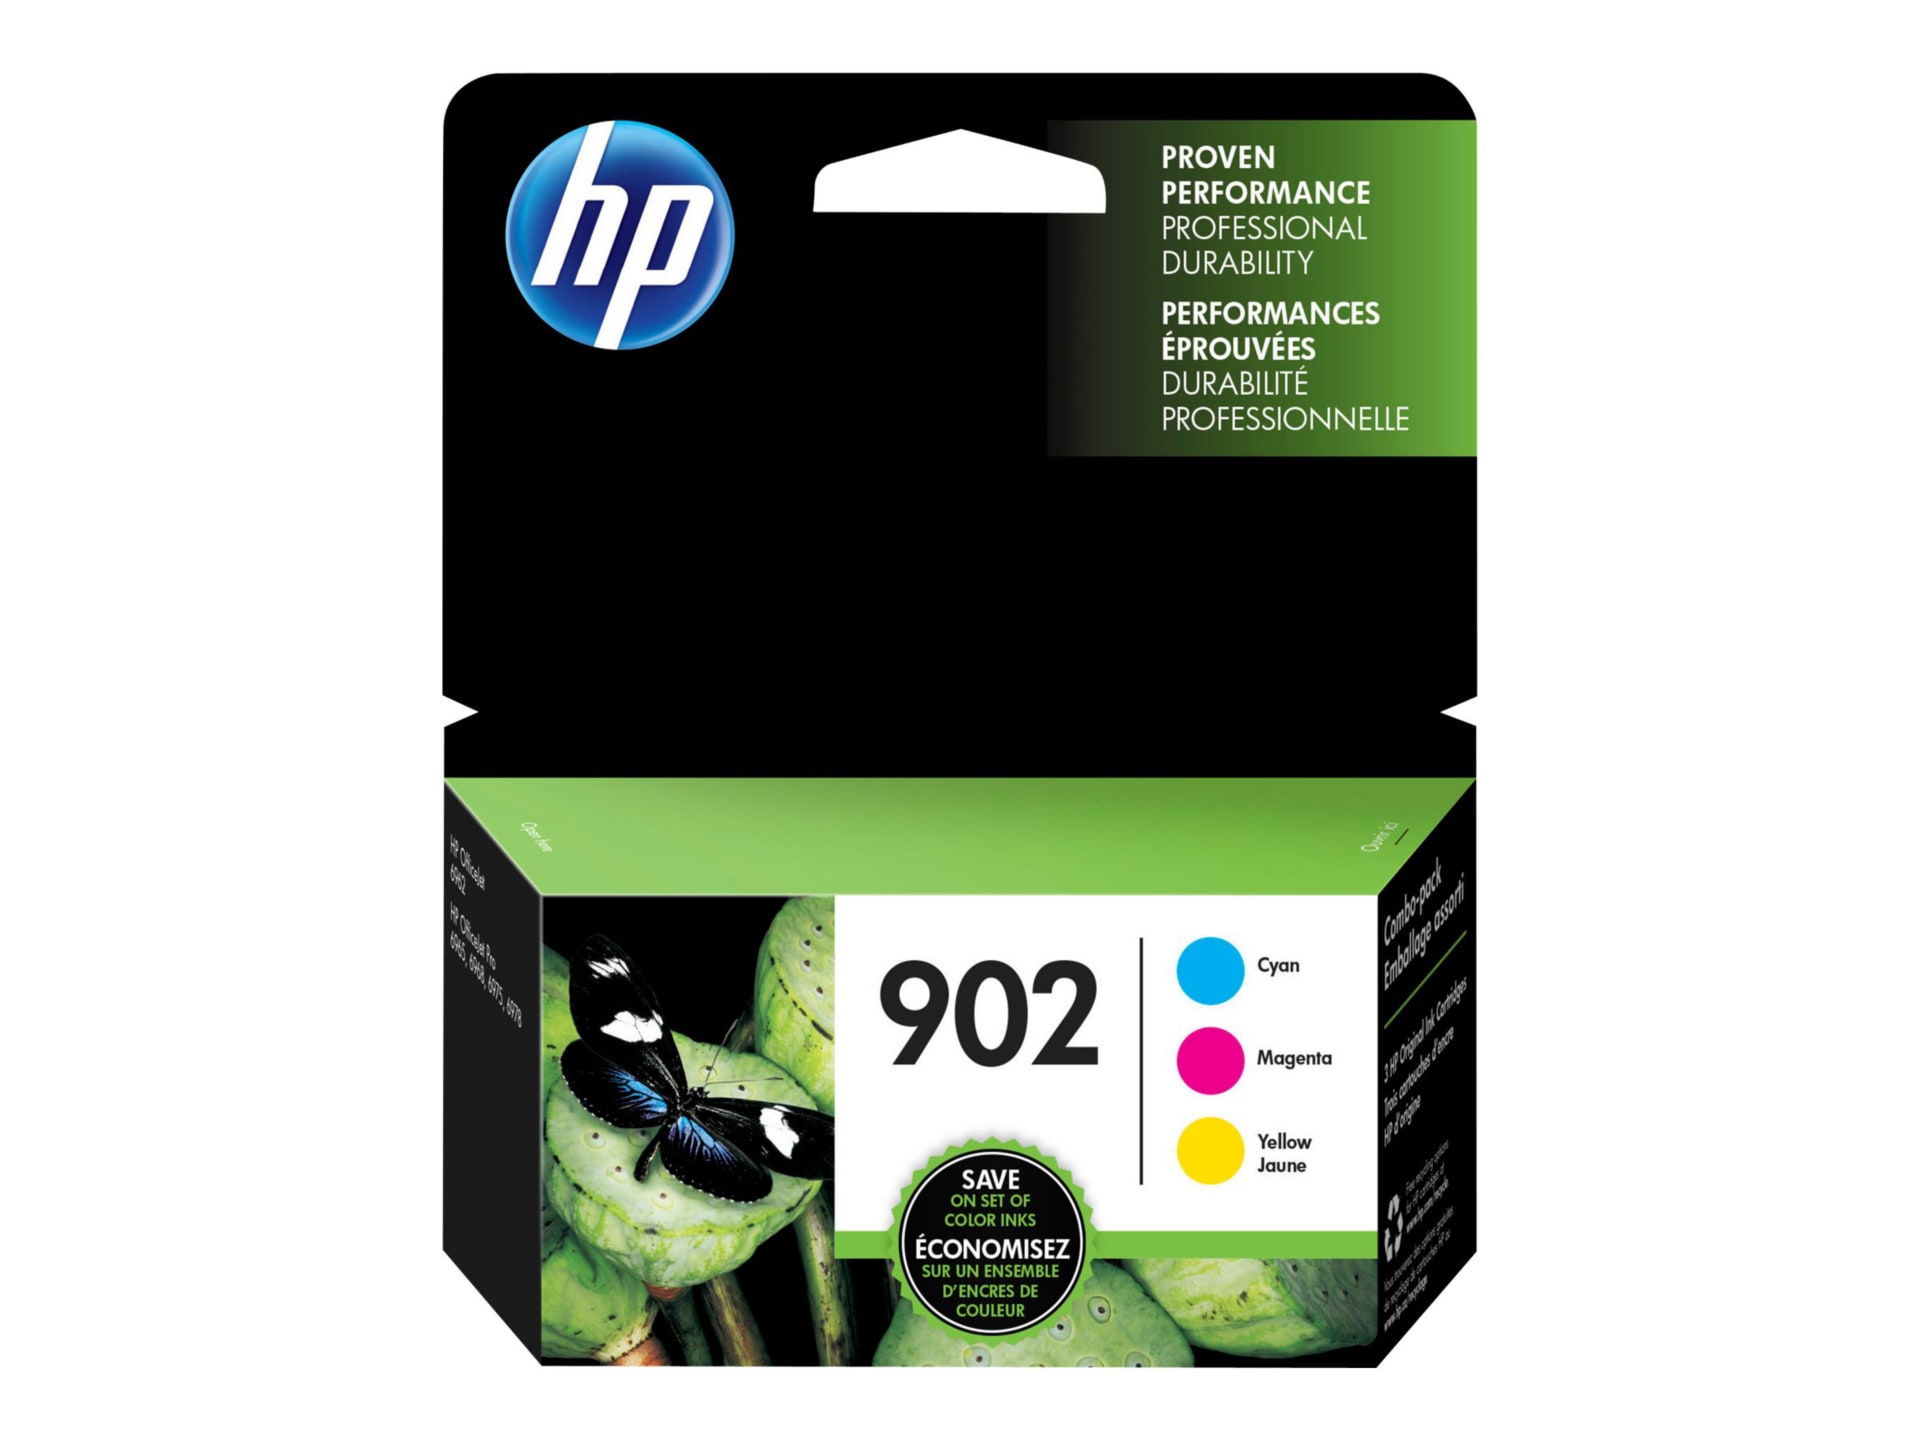 HP 902 Original Inkjet Ink Cartridge - Cyan, Magenta, Yellow - 3 / Pack